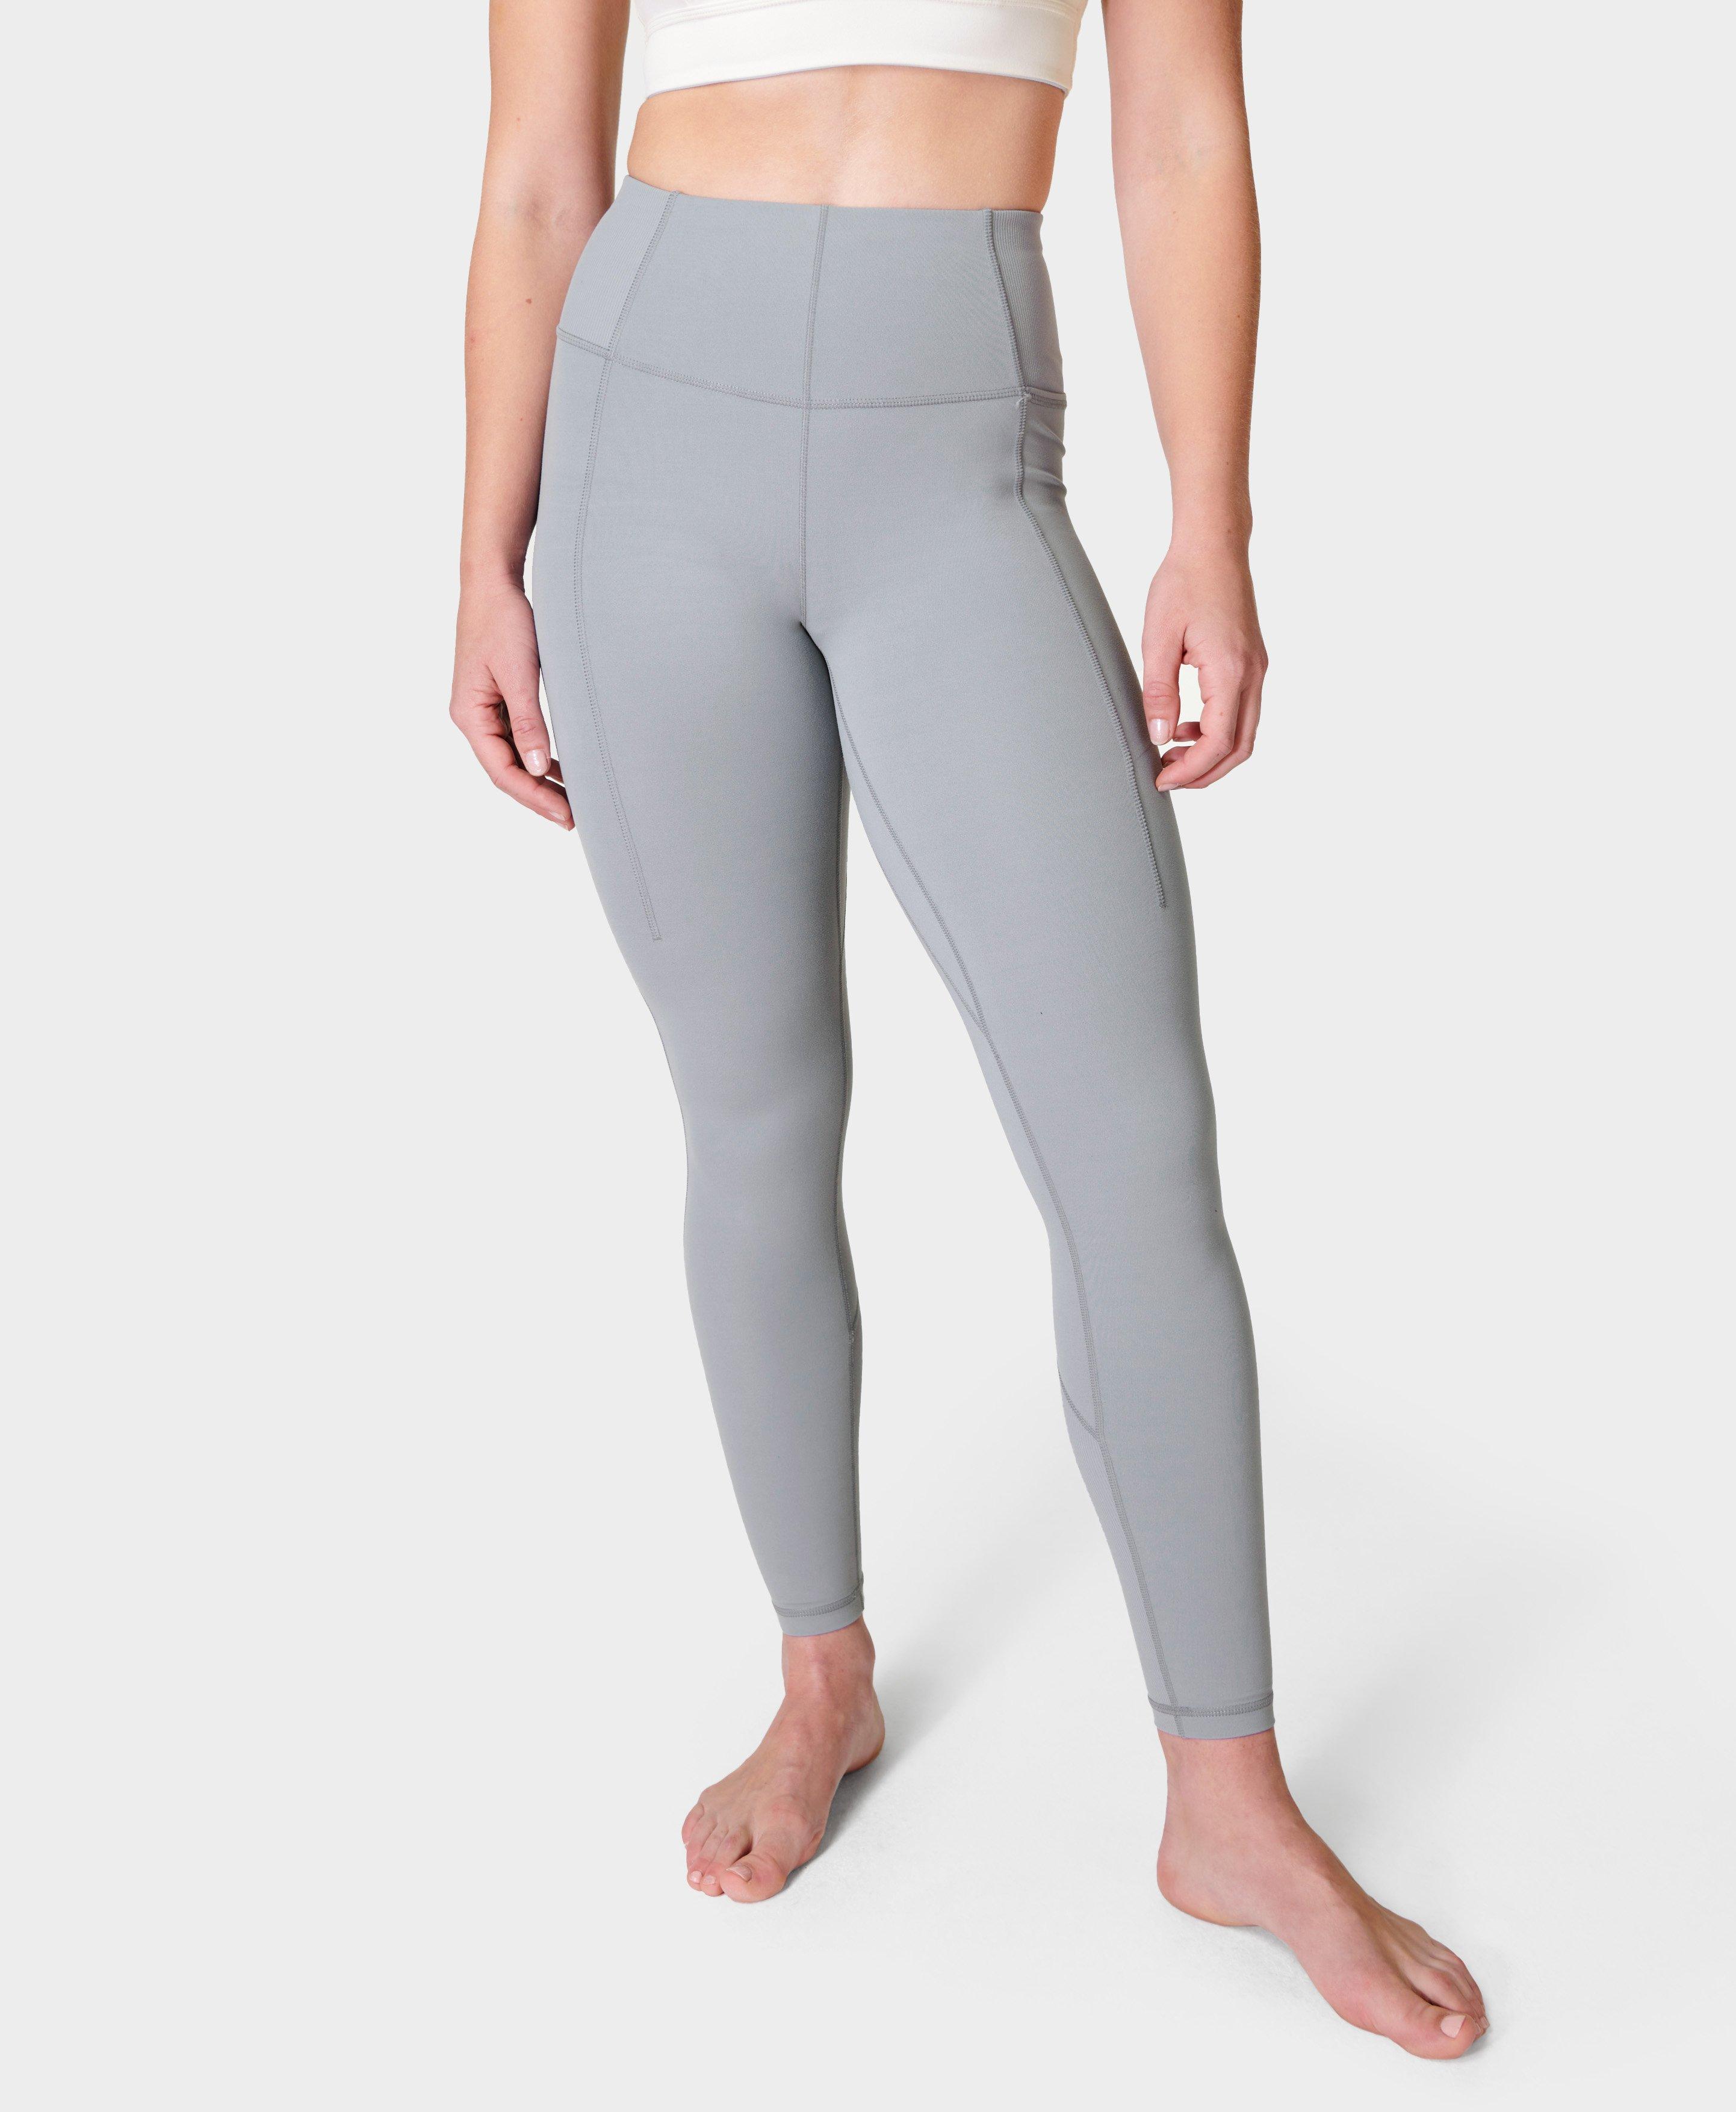 Super Soft Ribbed Yoga Leggings - Neutral Flow Grey, Women's Leggings